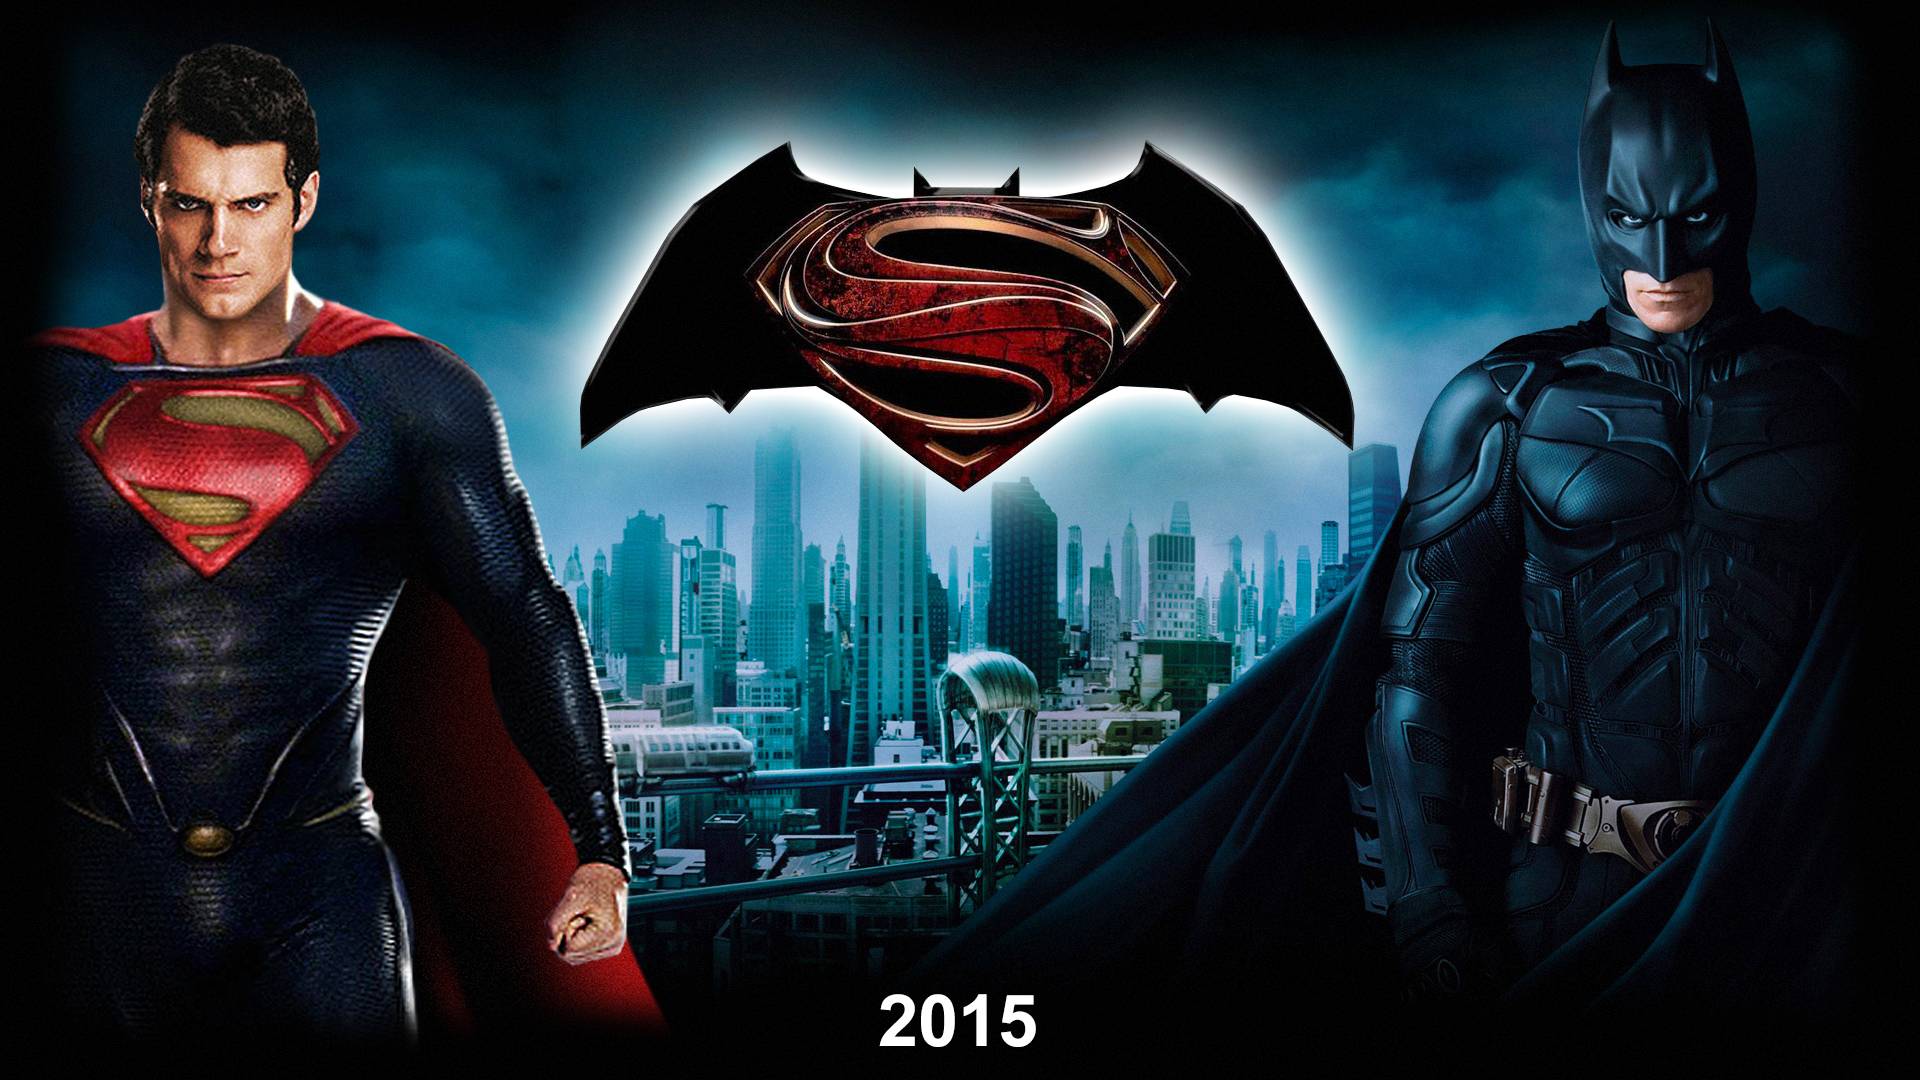 Batman vs Superman 2015 Movie wallpaper